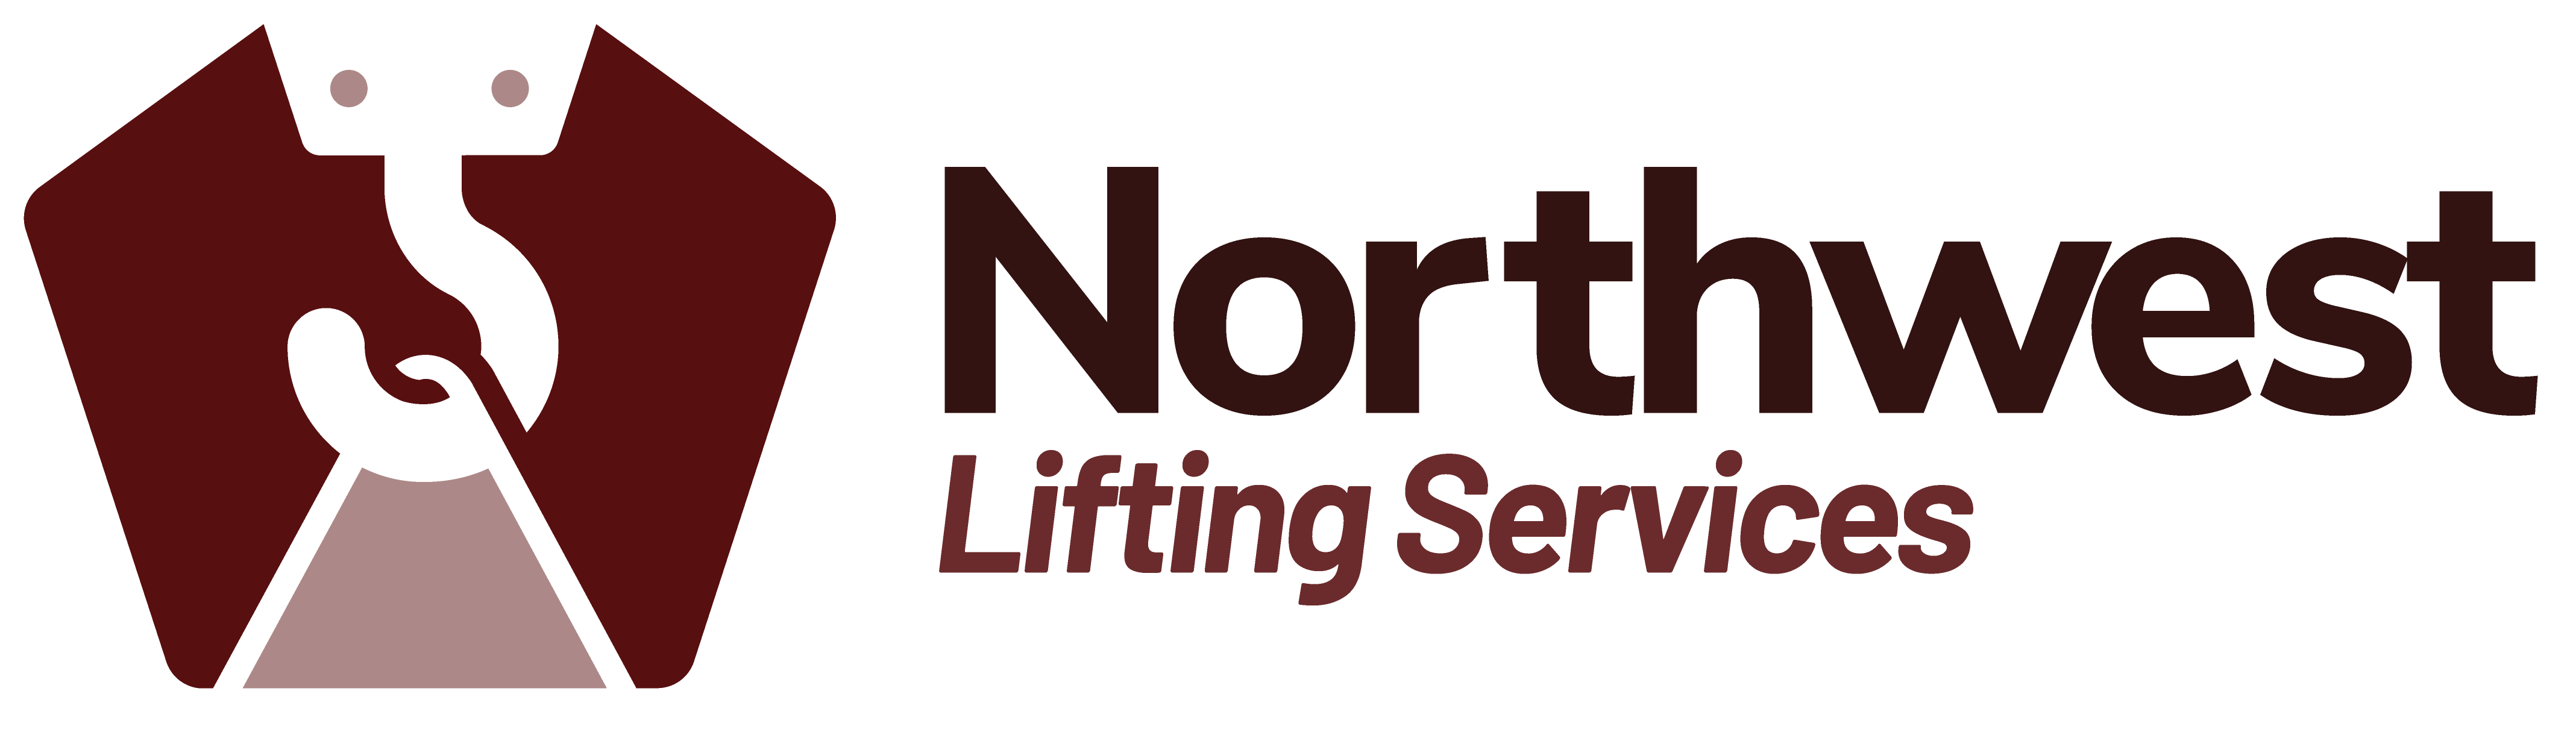 Northwest Lifting services's logo